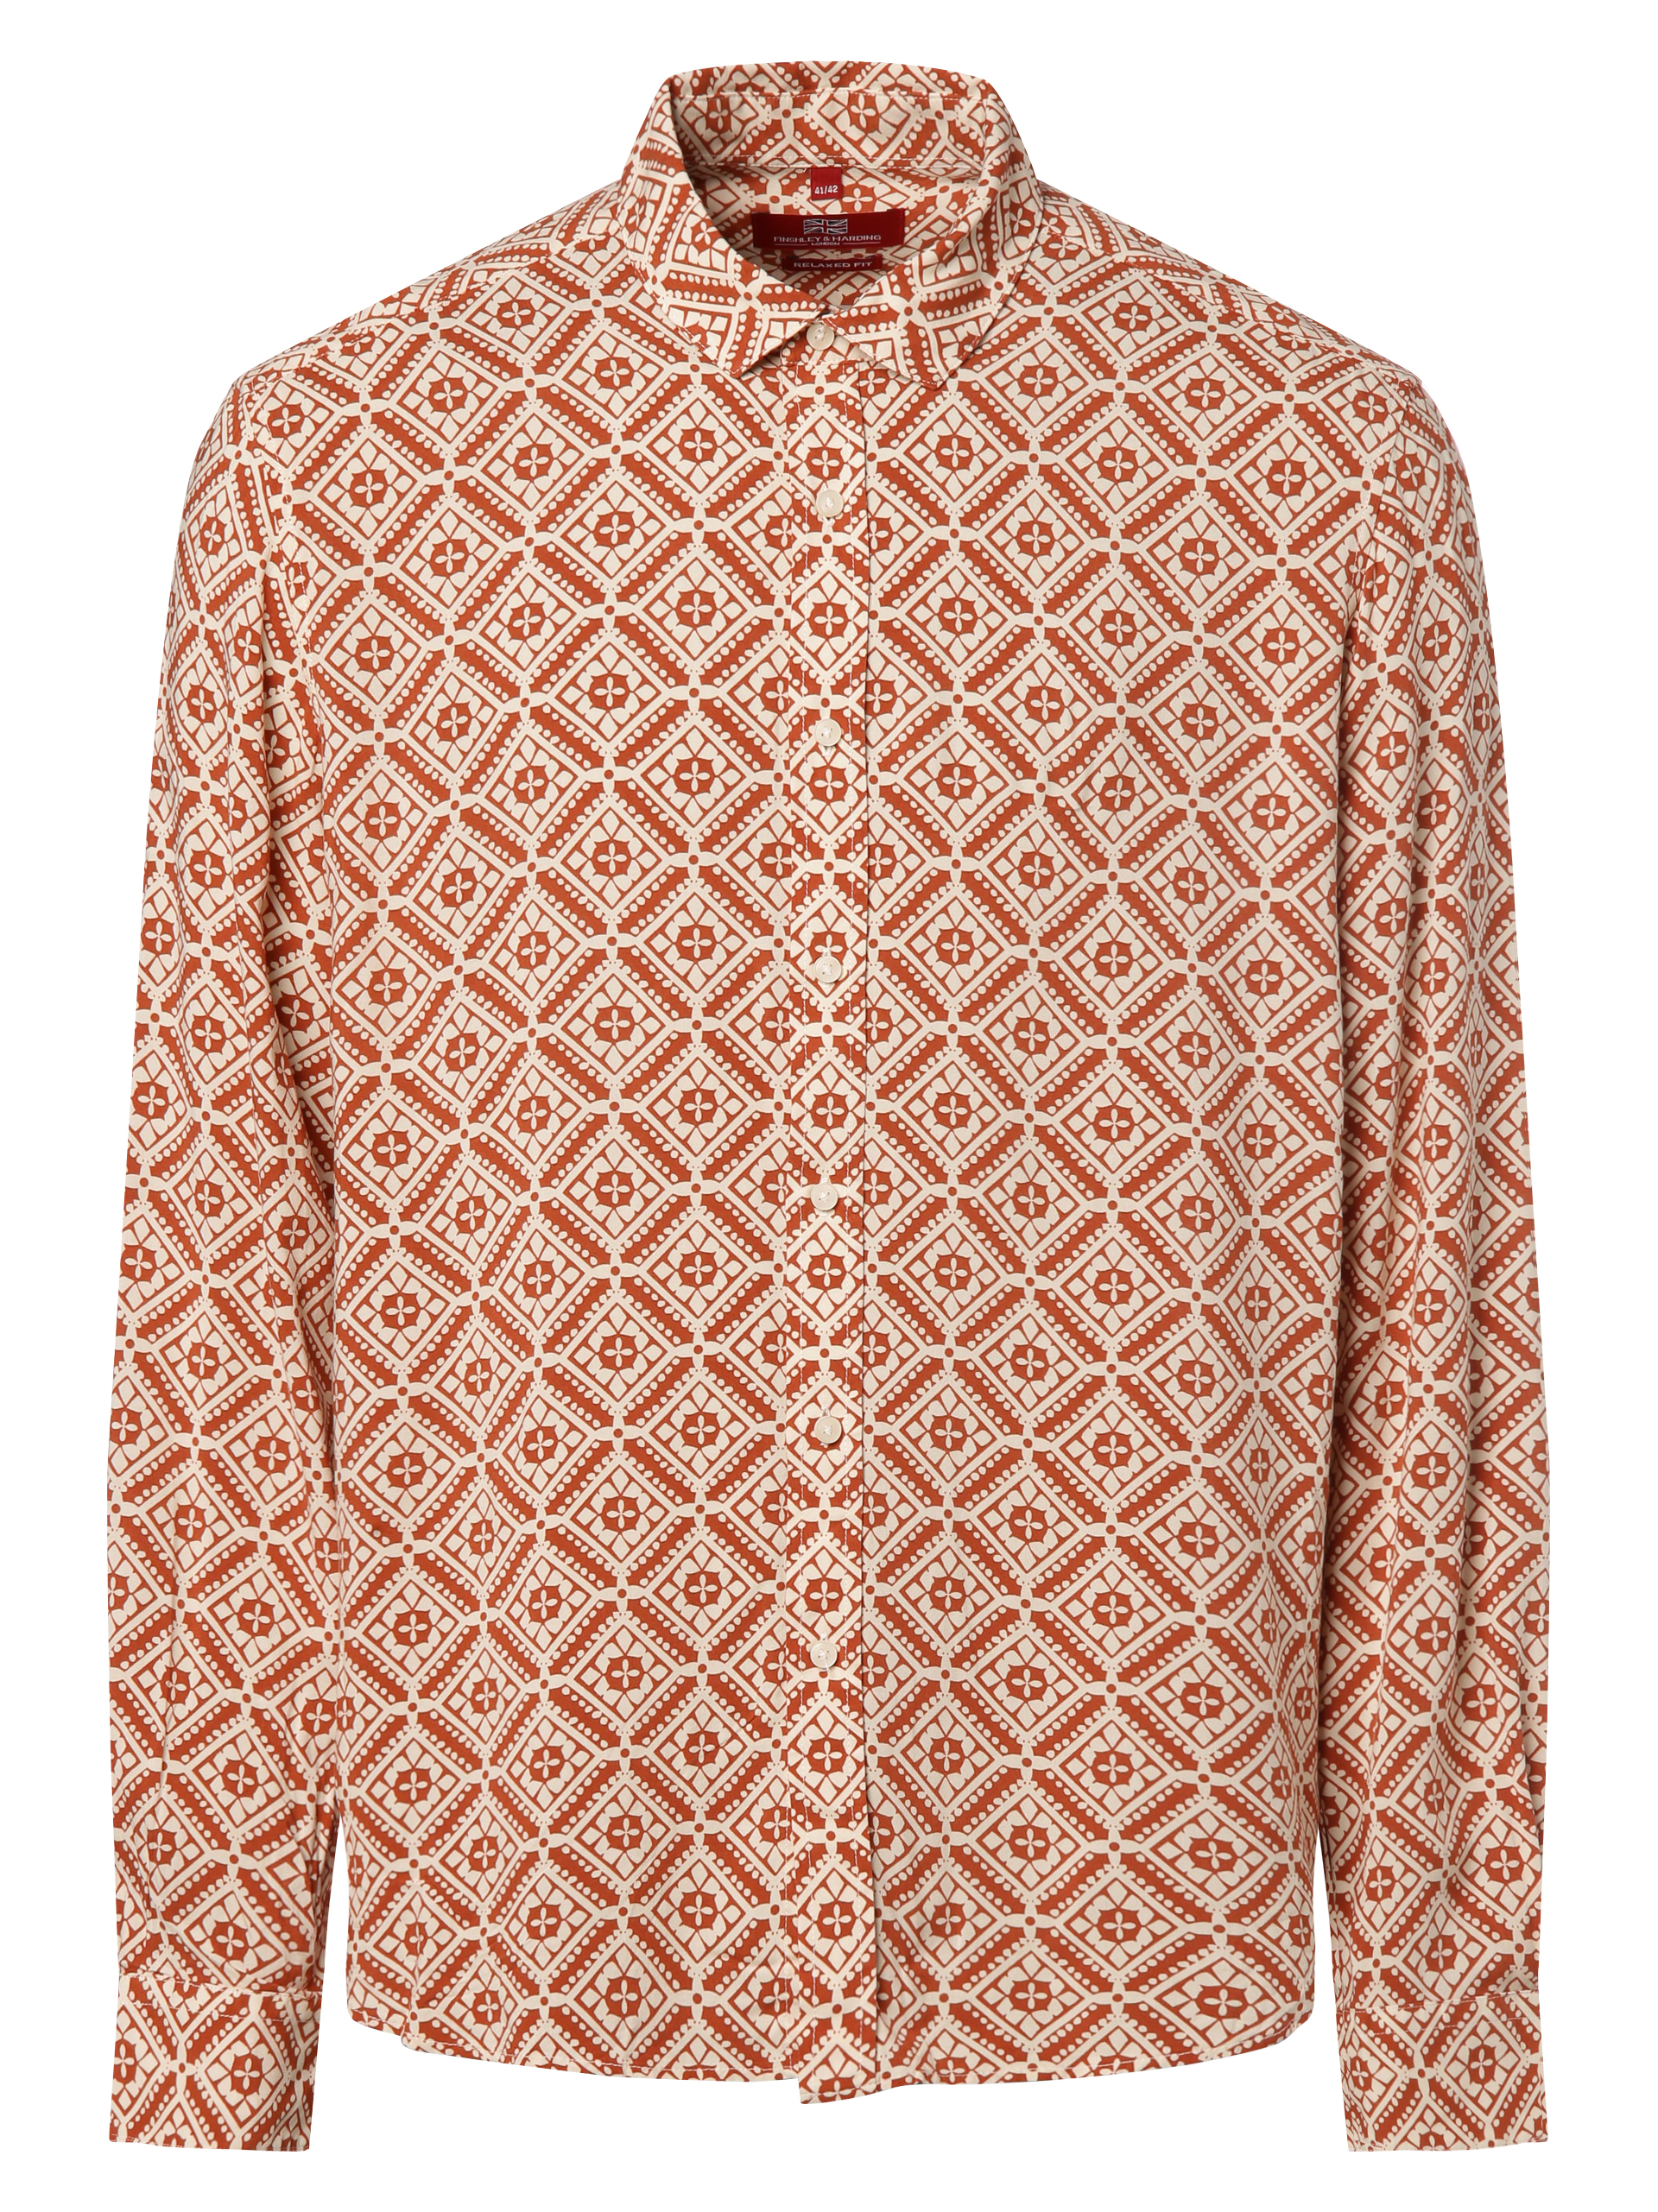 Рубашка Finshley & Harding London, оранжевый